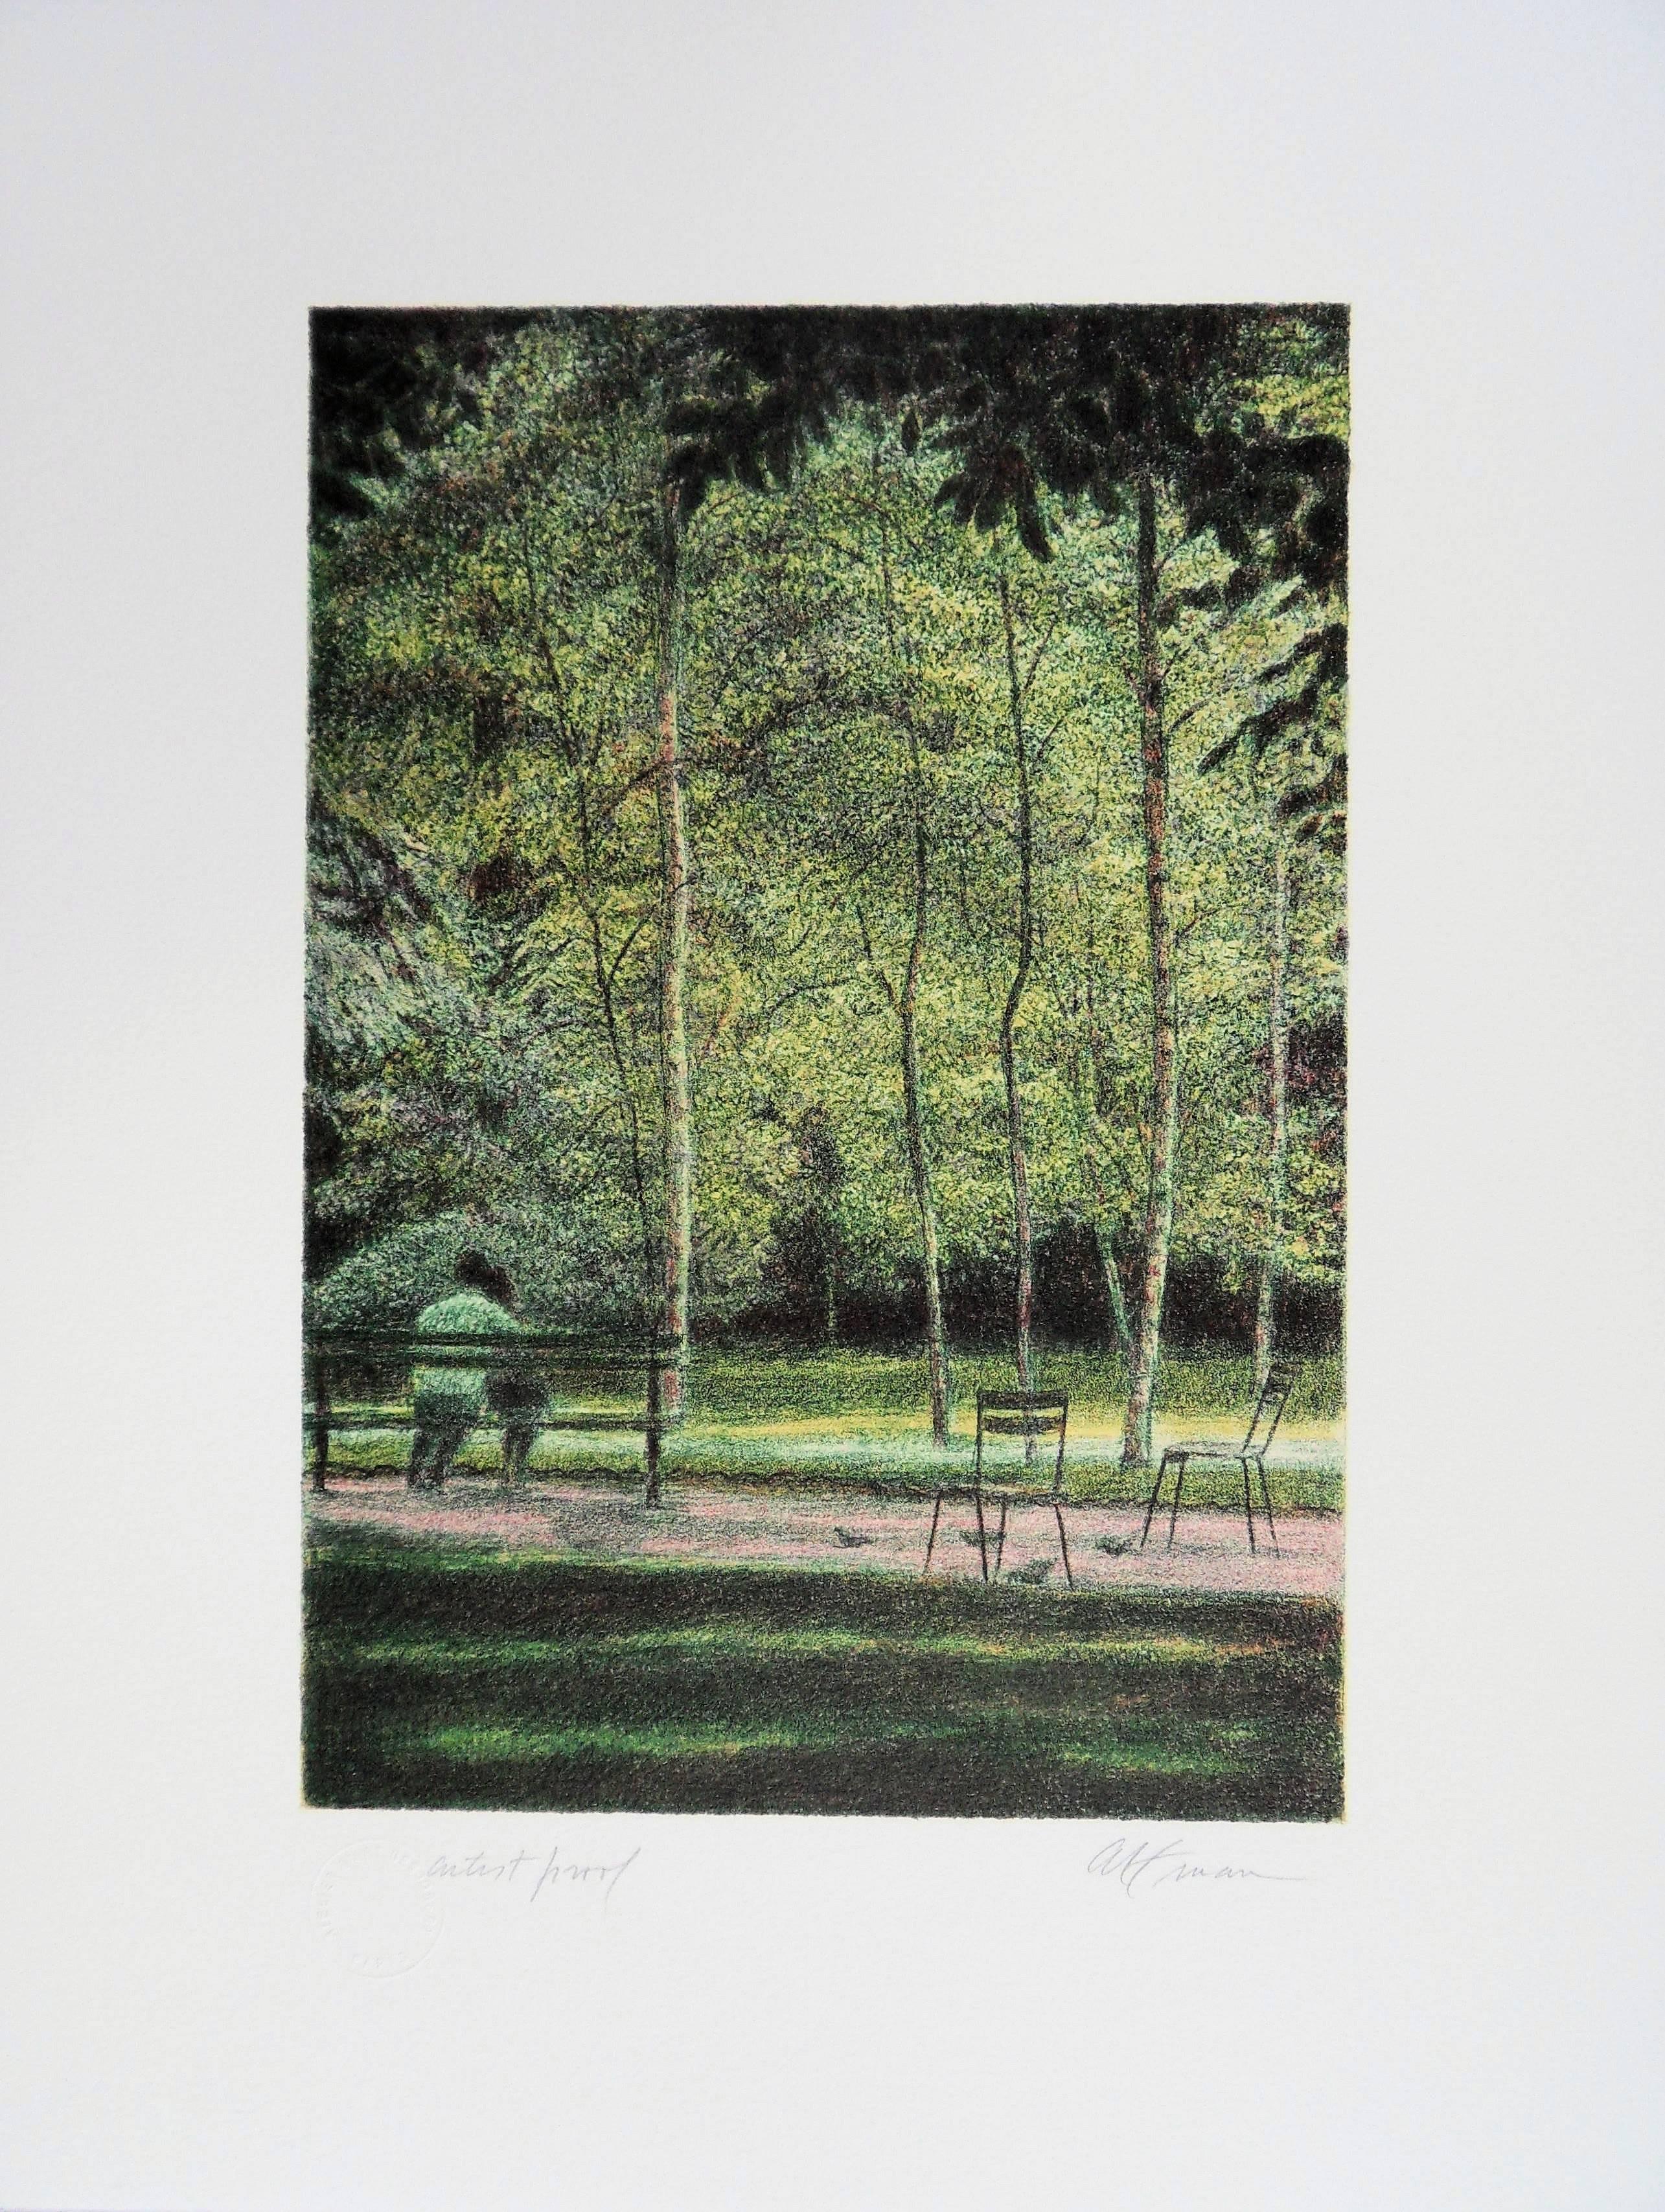 Harold Altman Figurative Print - New York : Lovers in Central Park - Original handsigned lithograph